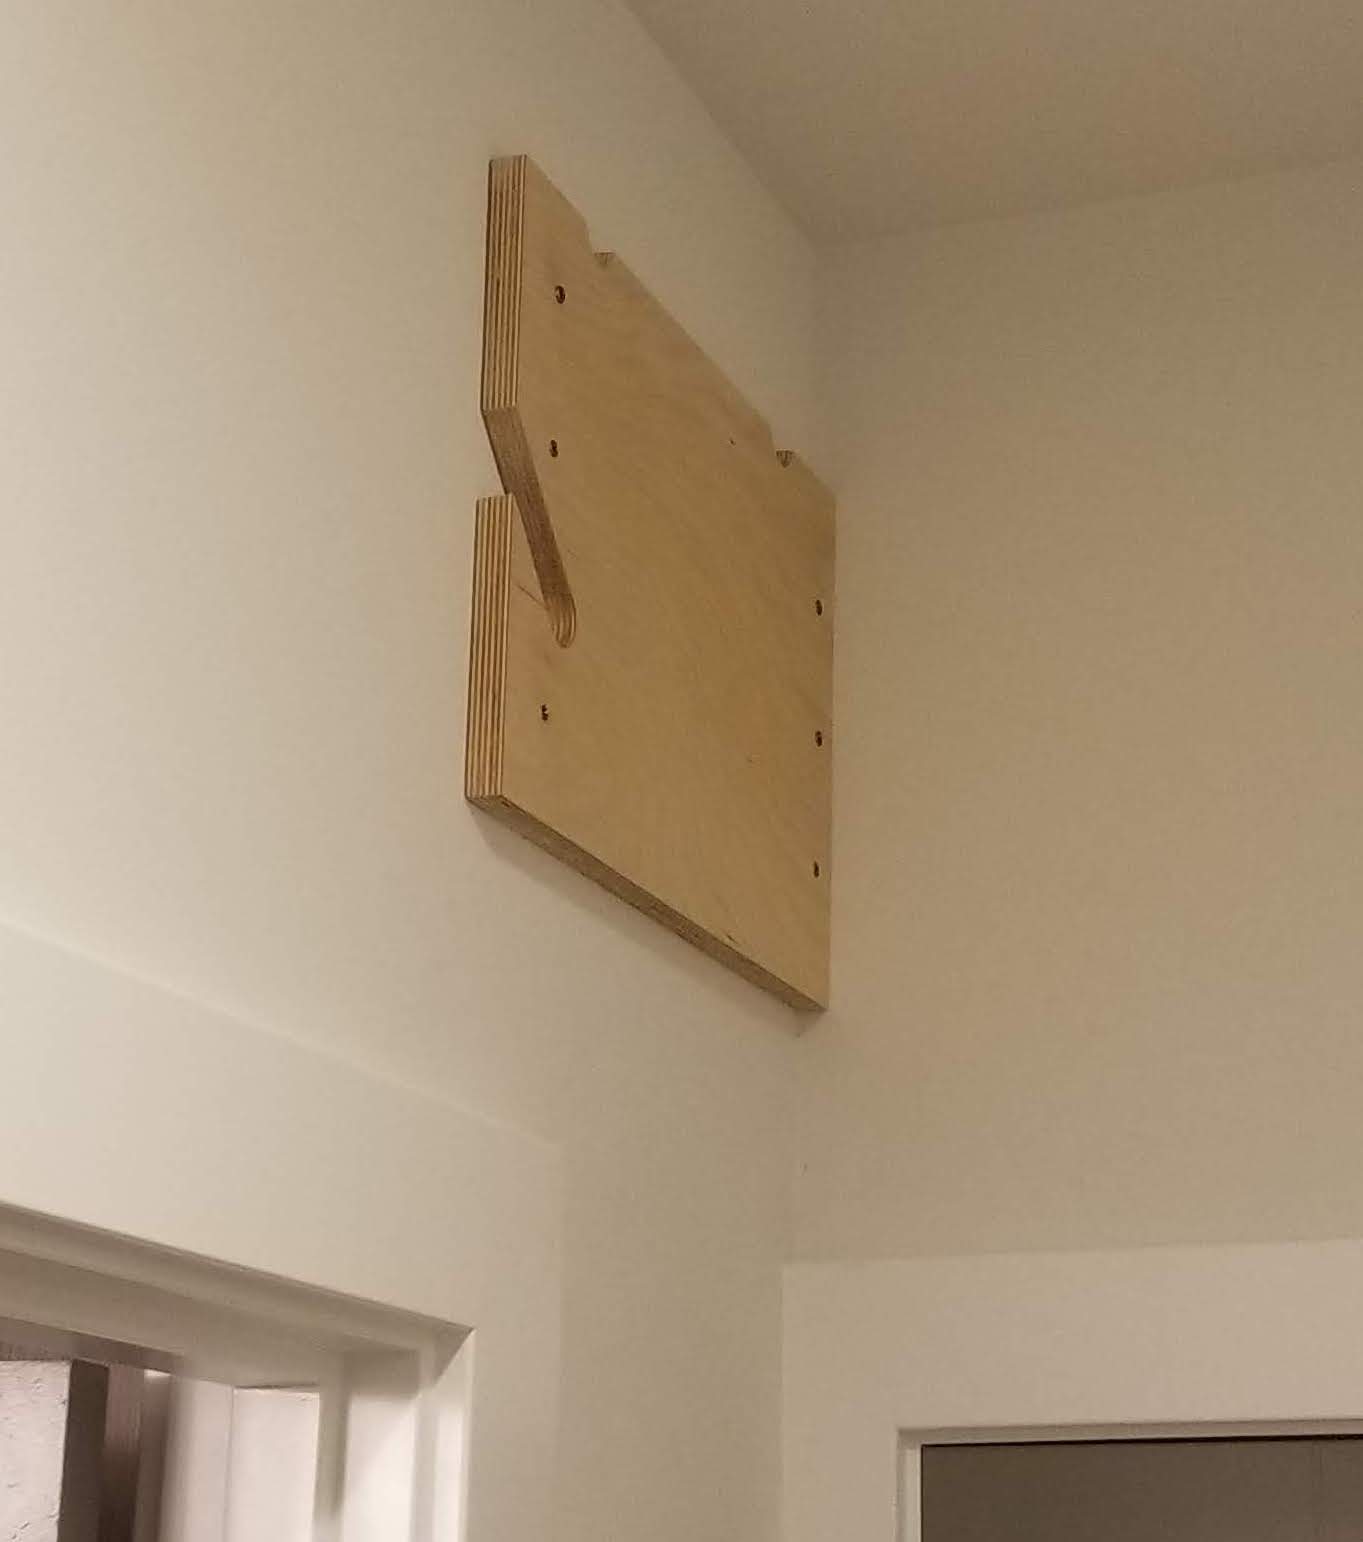 one board mounted